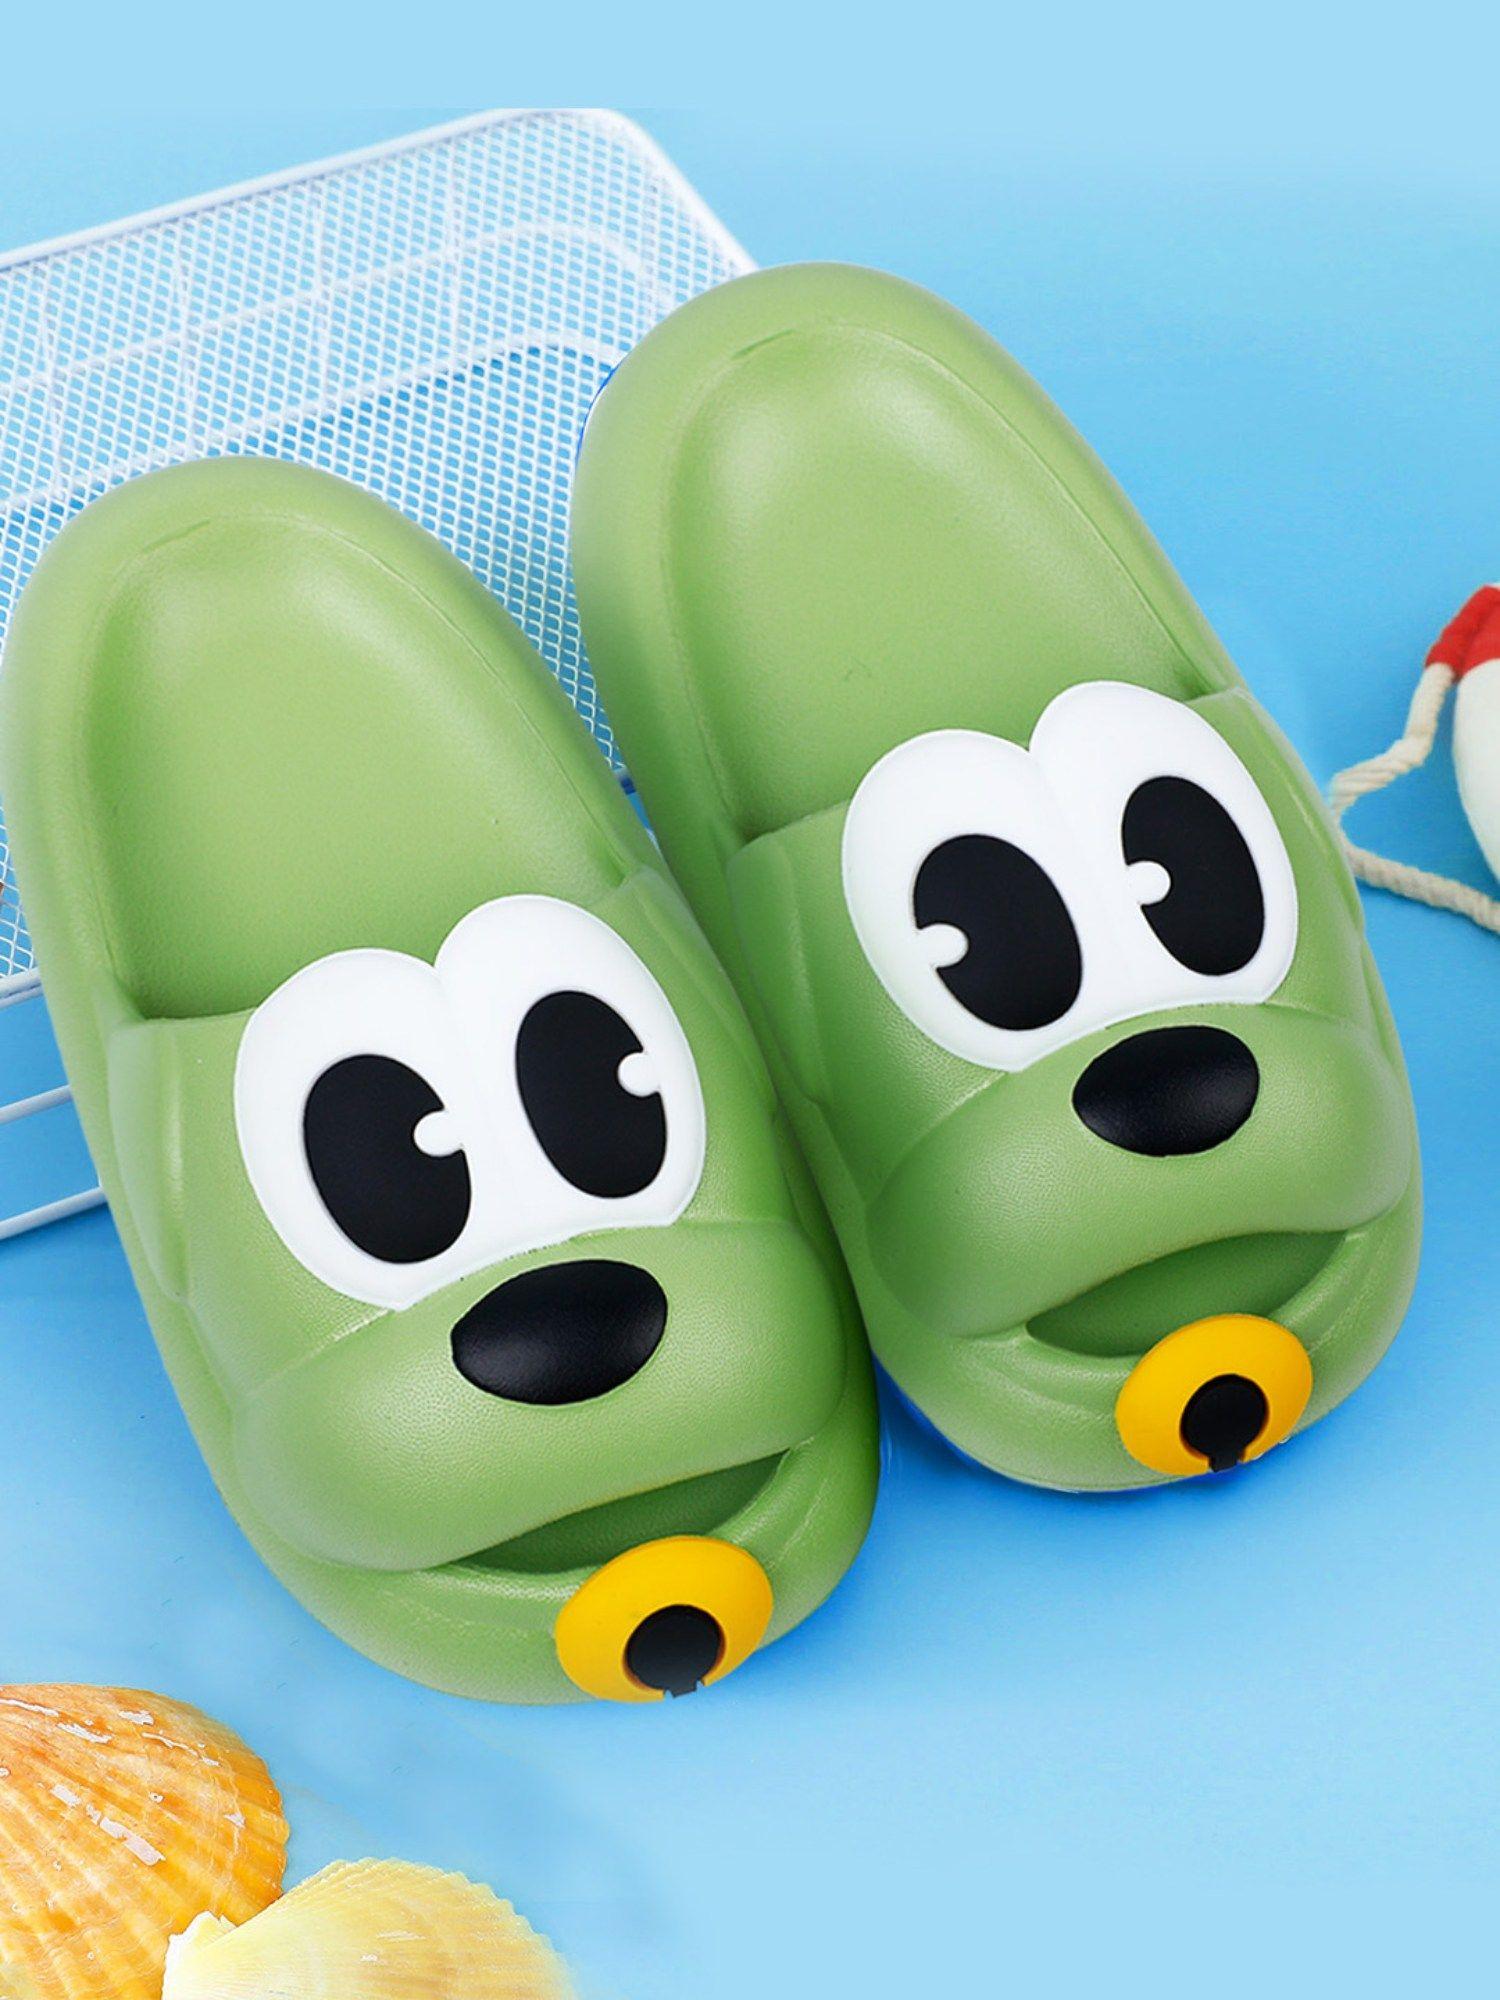 dog waterproof soft slippers anti skid sliders green